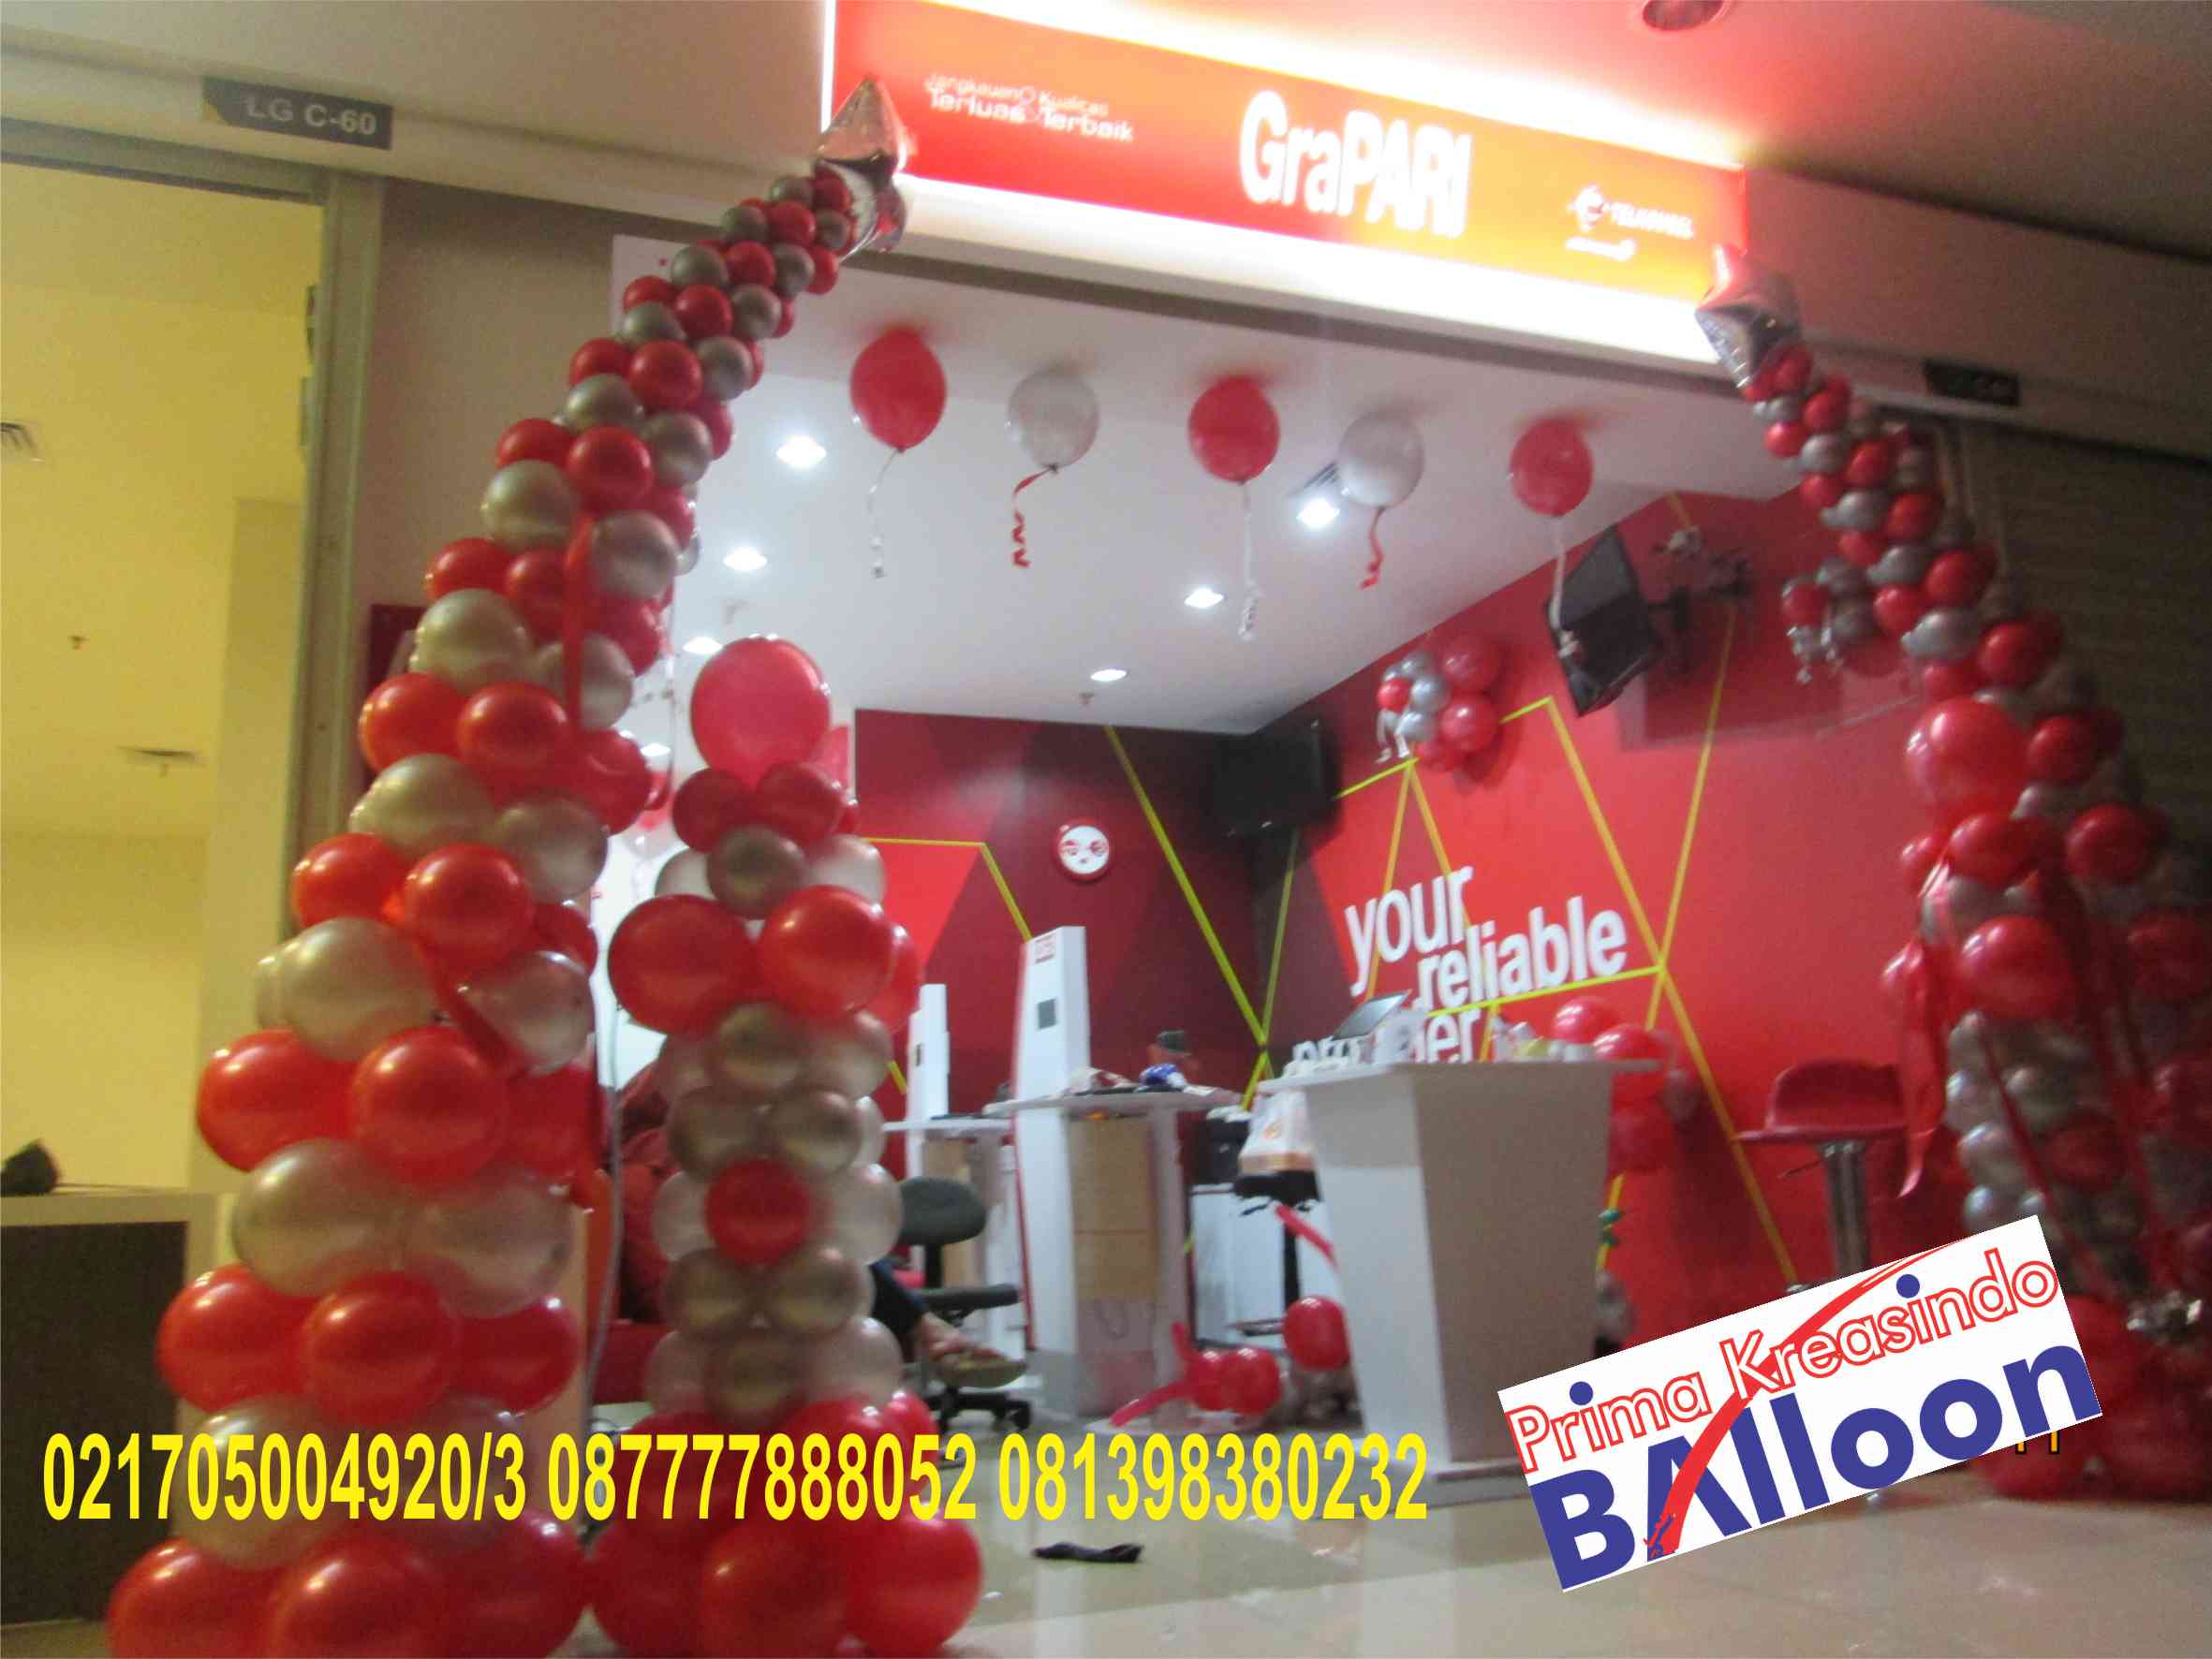 Dekorasi  balon  peresmiaan gerai grapari telkomsel di mall